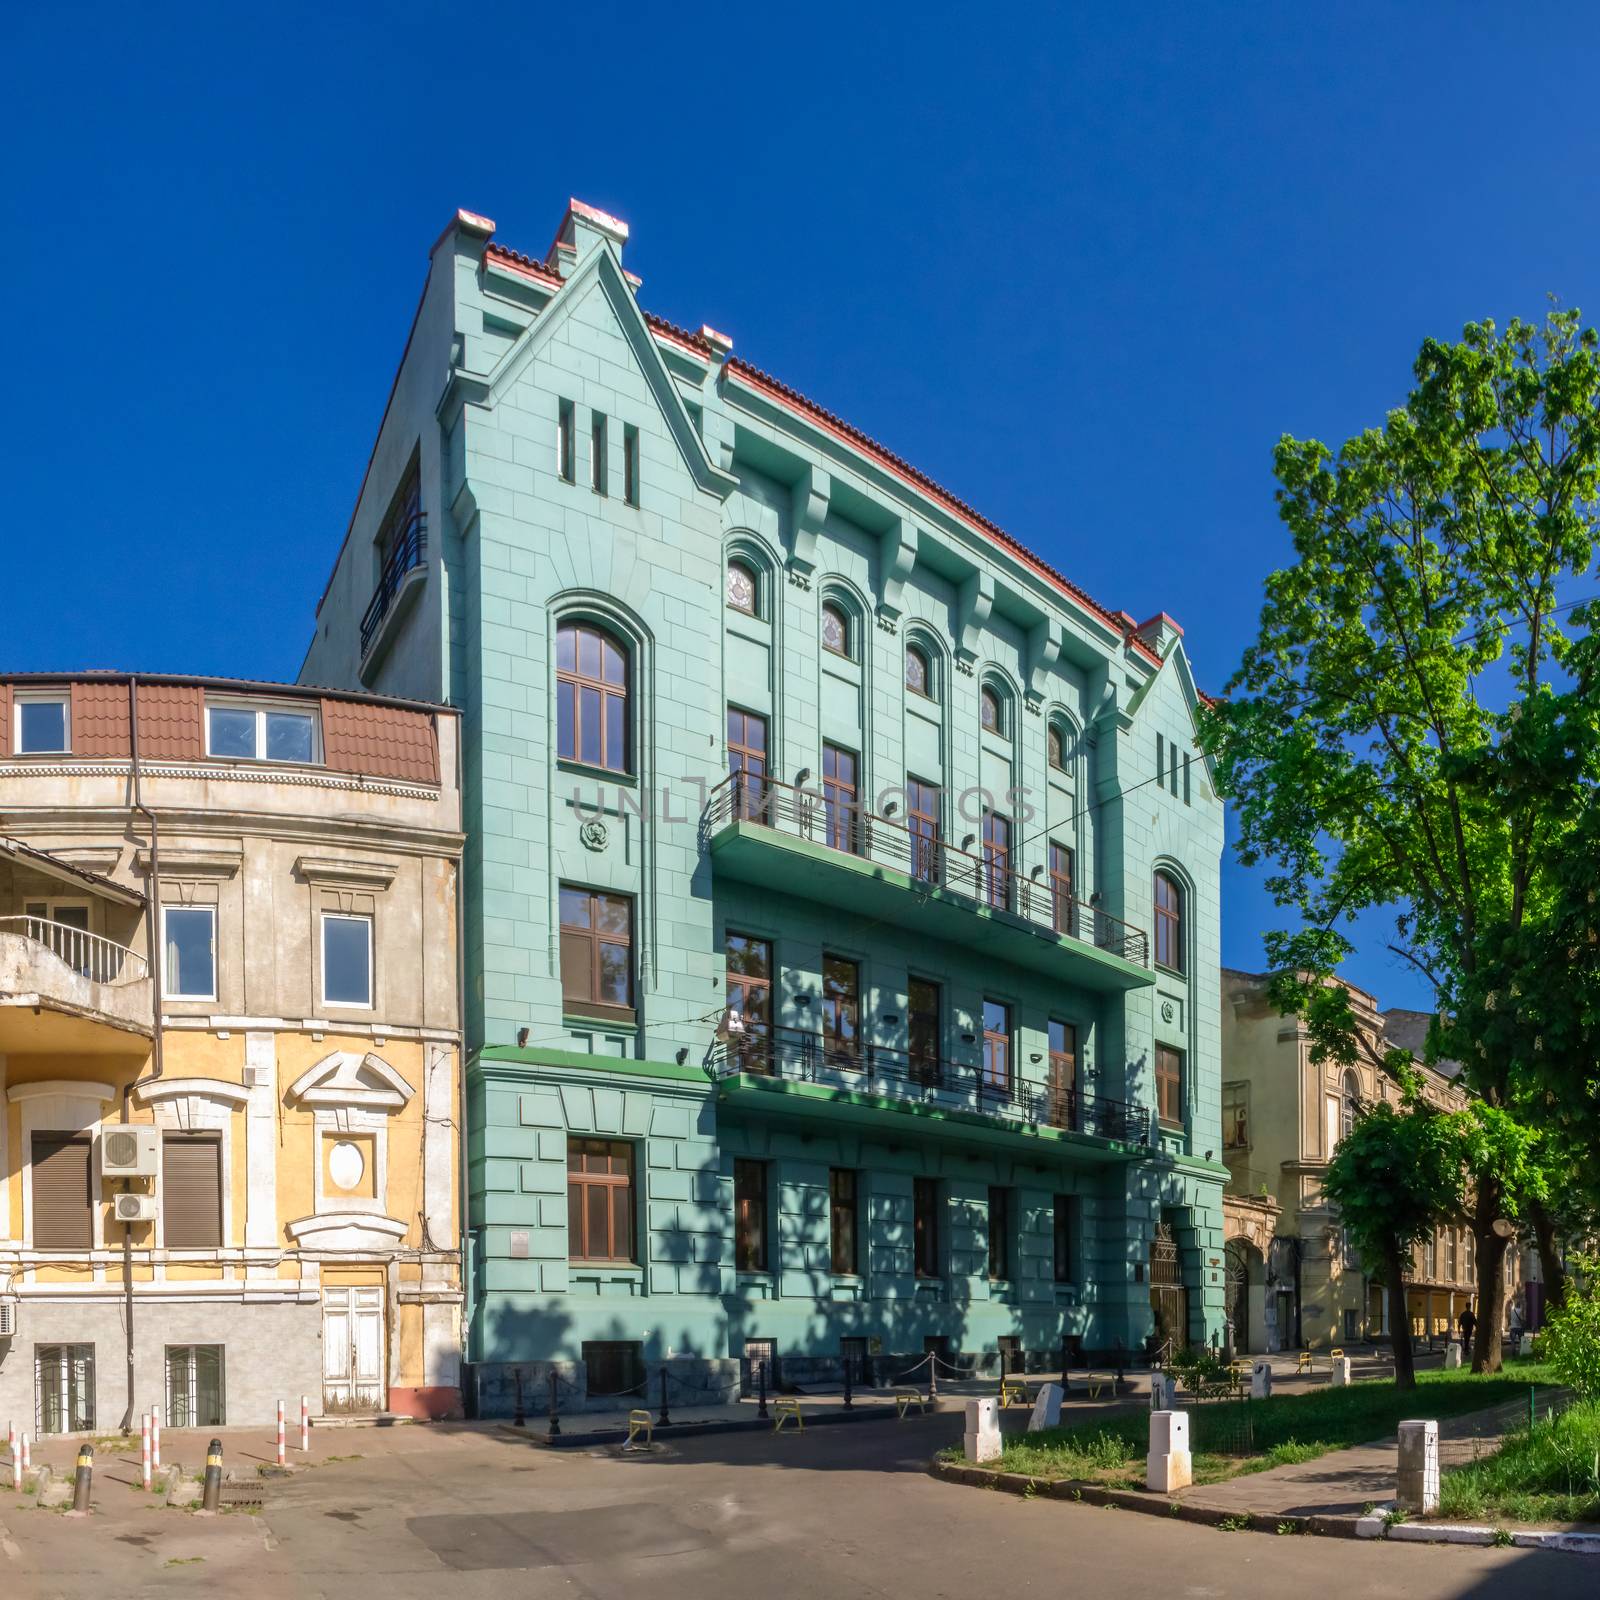 Old historic house in Odessa, Ukraine by Multipedia